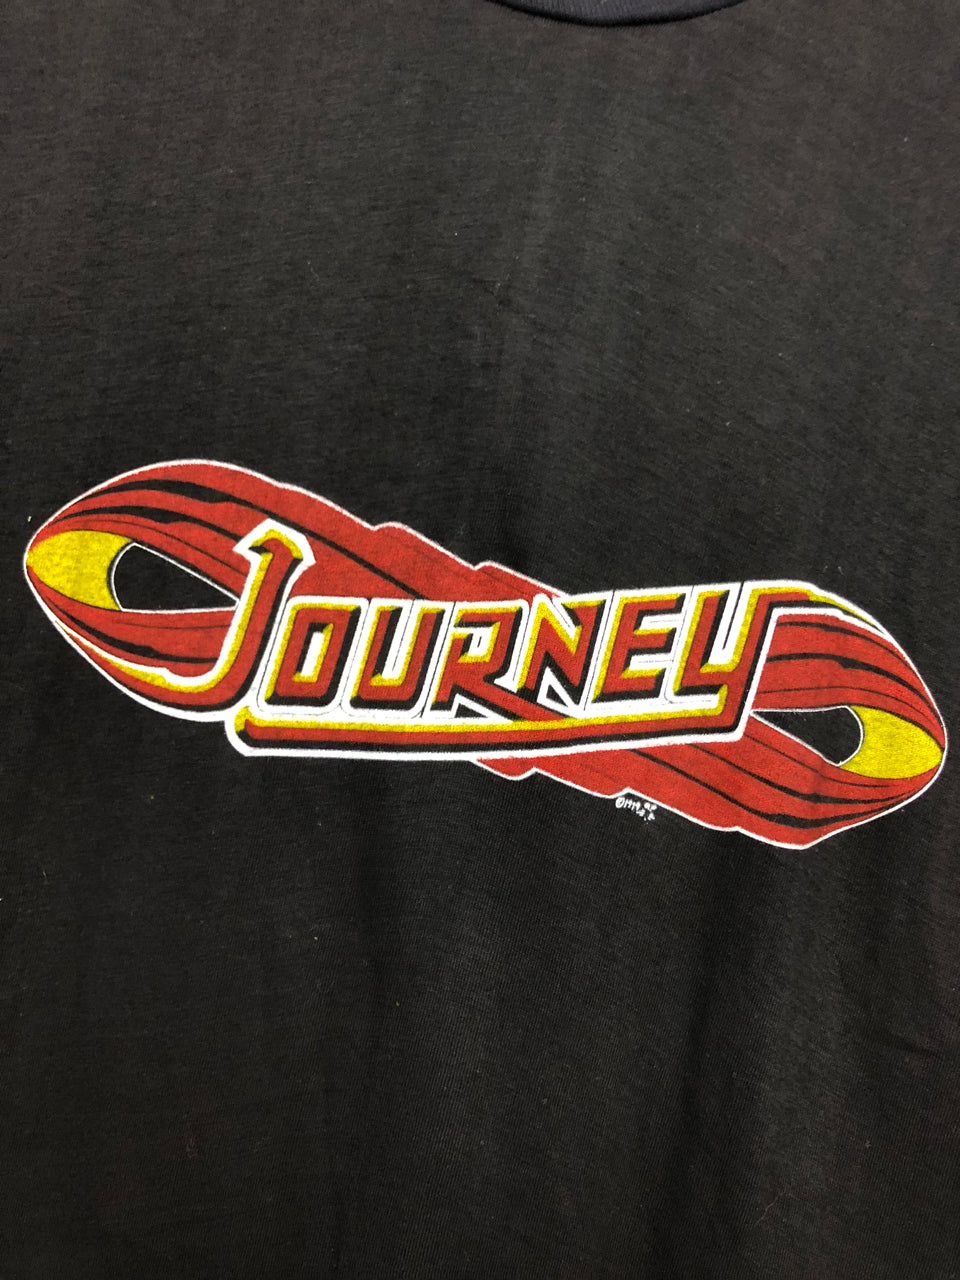 Journey World Tour 1979 T-Shirt